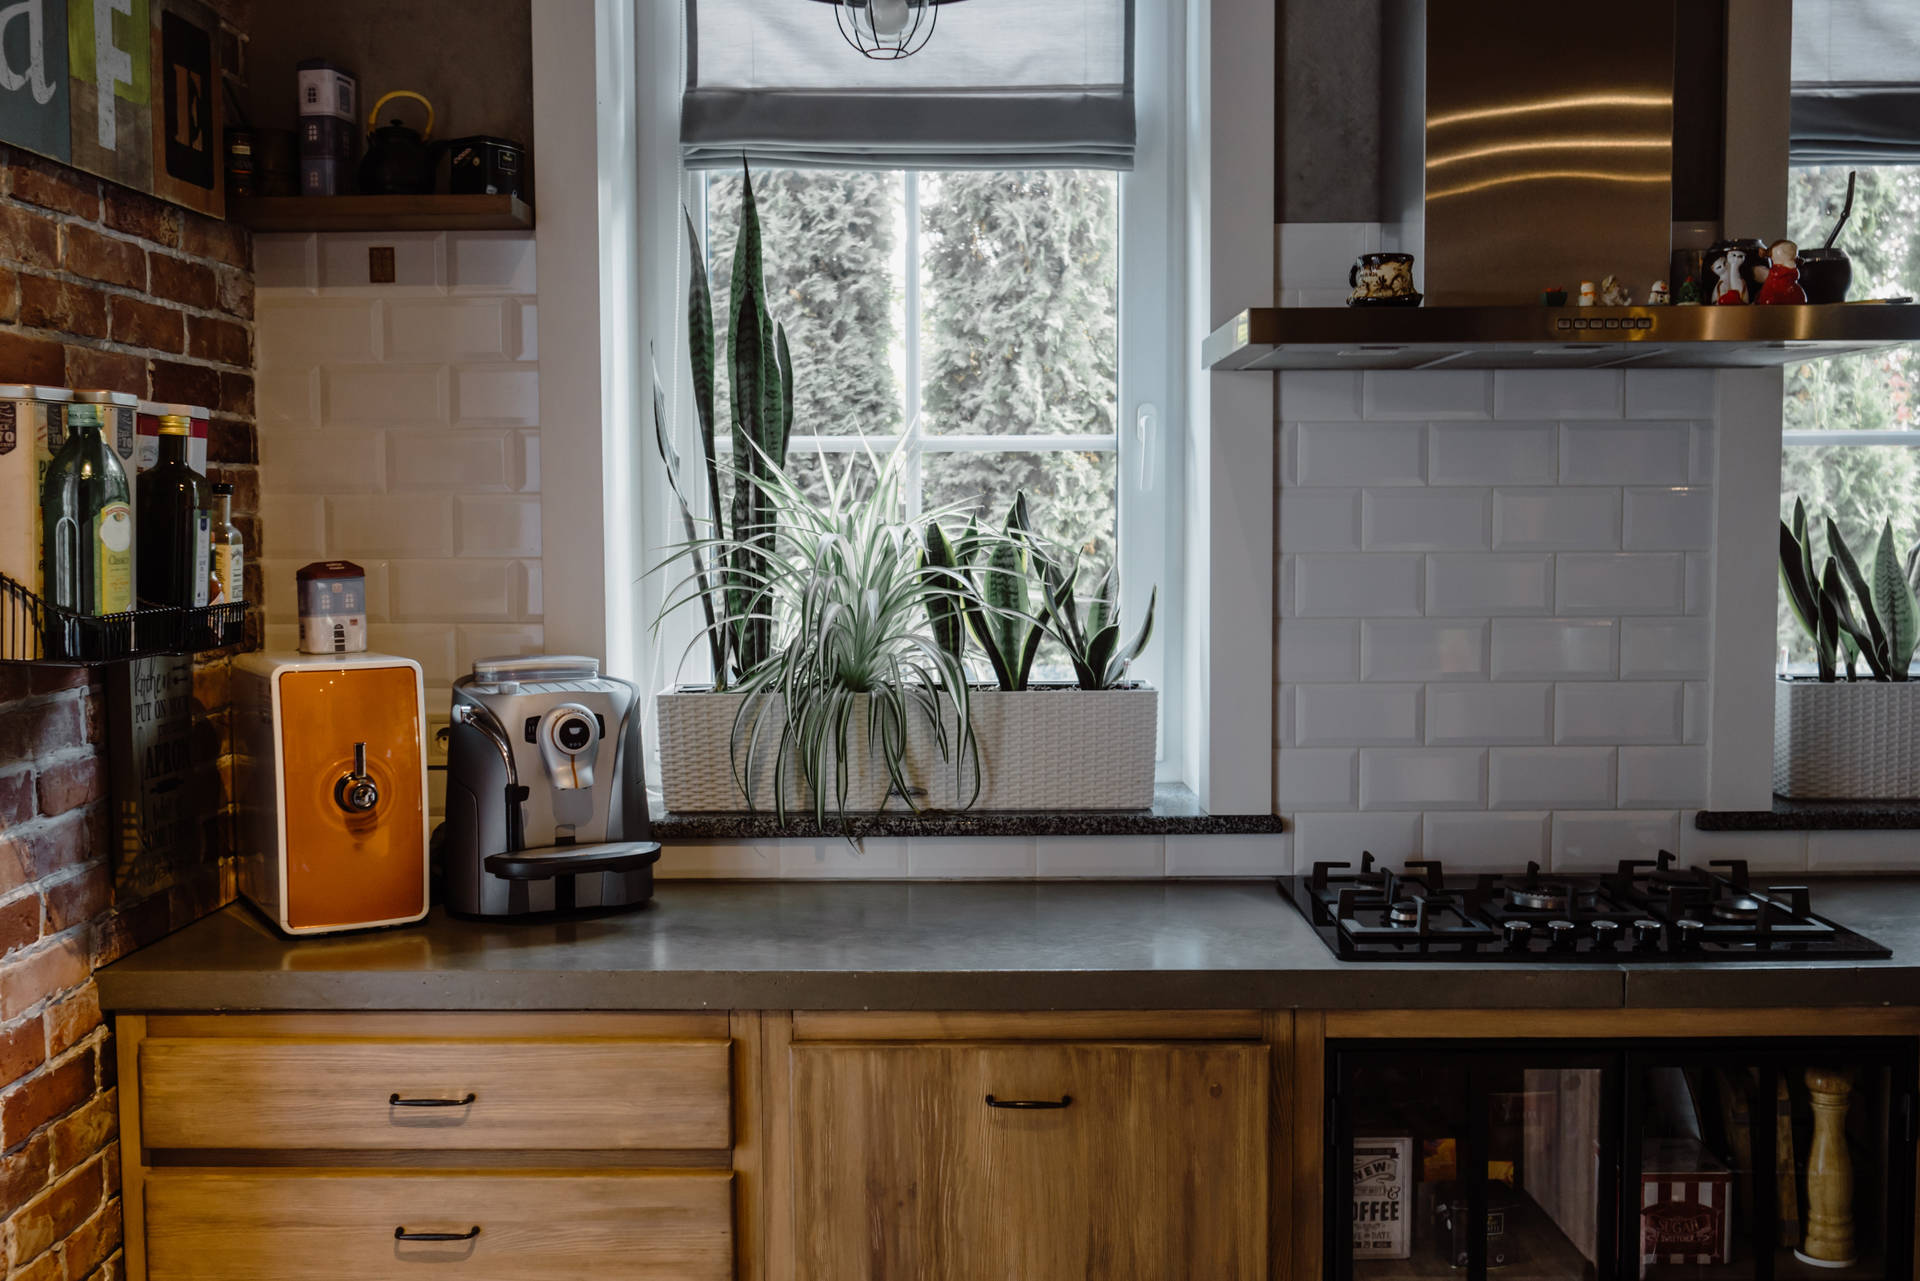 Pleasing Kitchen With Appliances Wallpaper